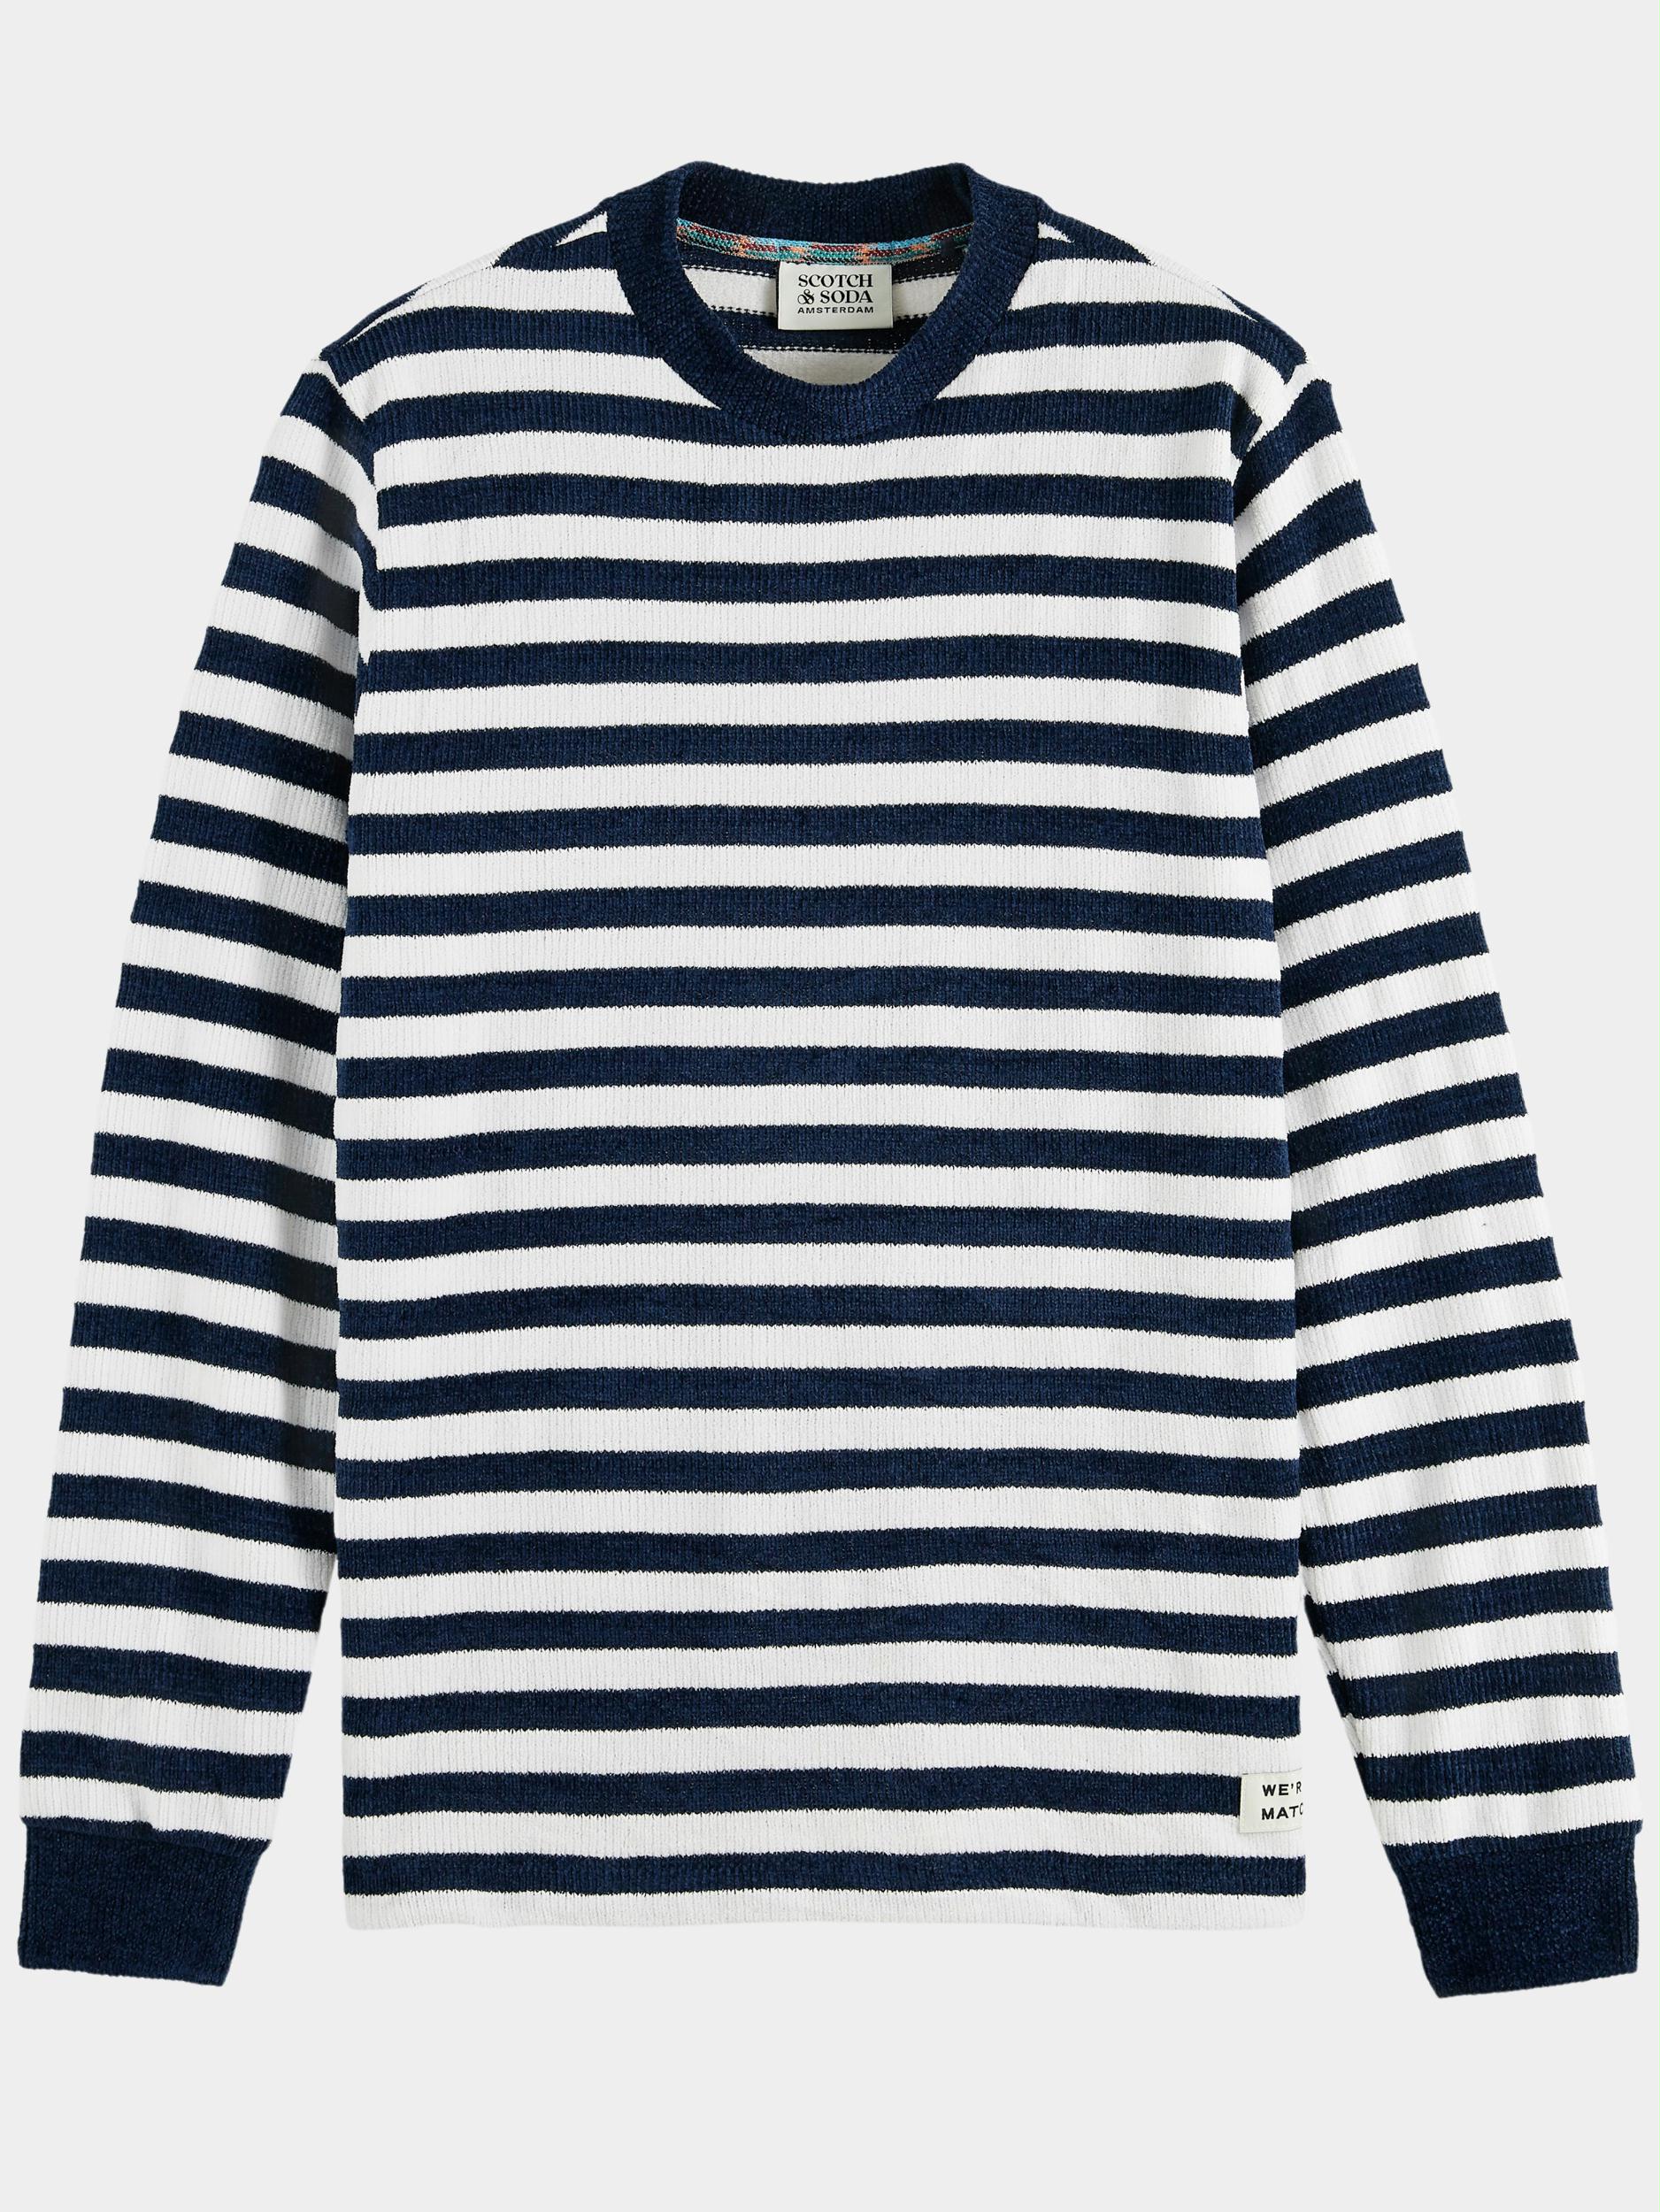 Scotch Soda Sweater Multi Textured stripe sweatshirt 169911 0218